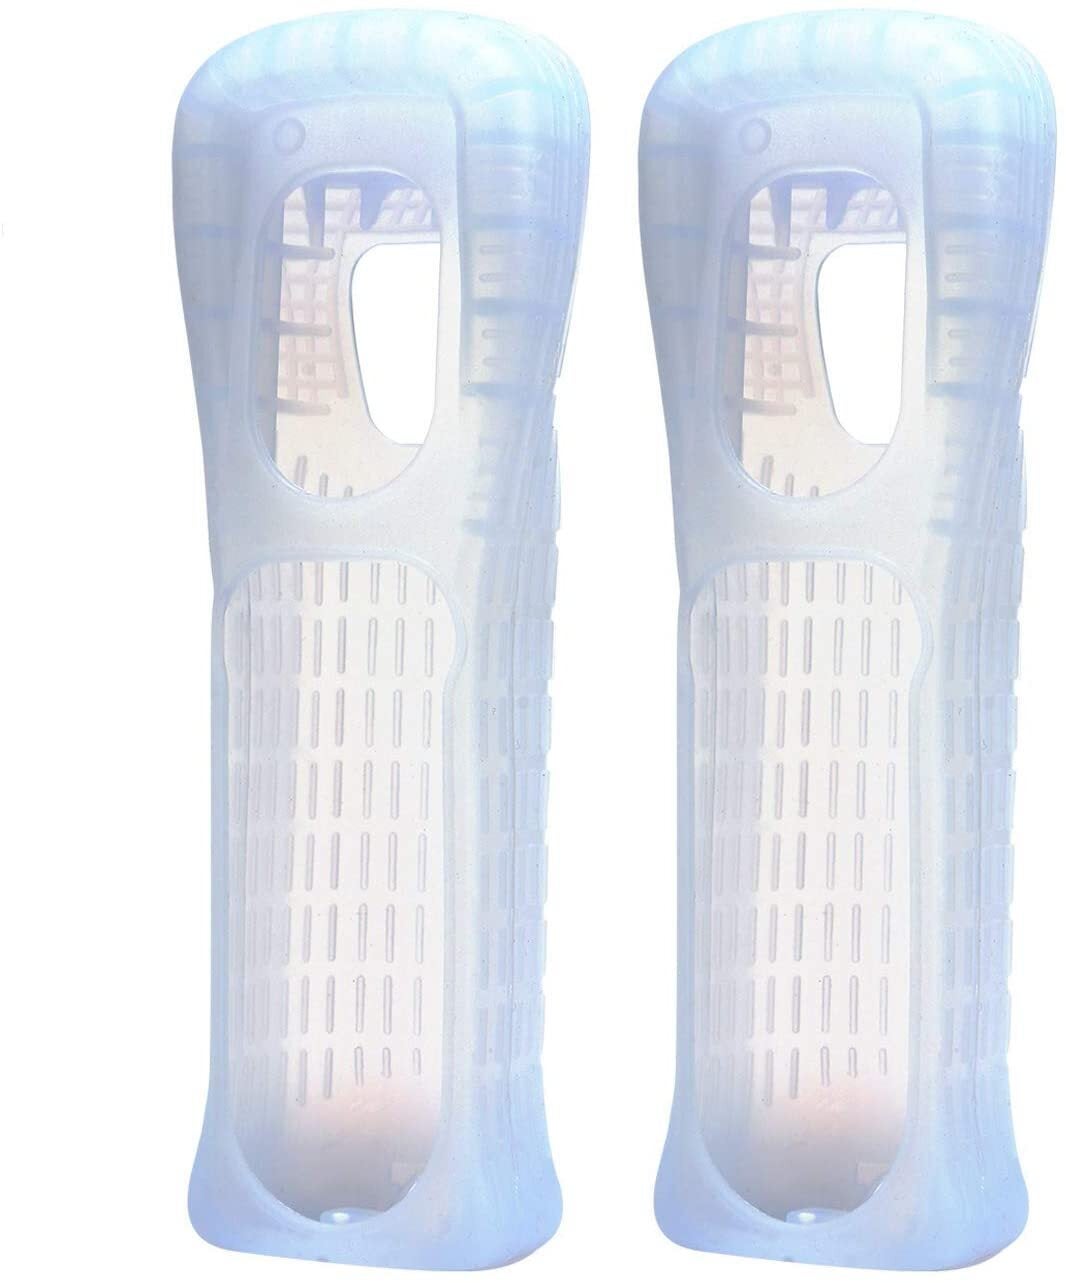 2x TechFlo Soft Silicone Case Covers for Nintendo Wii Remote Control